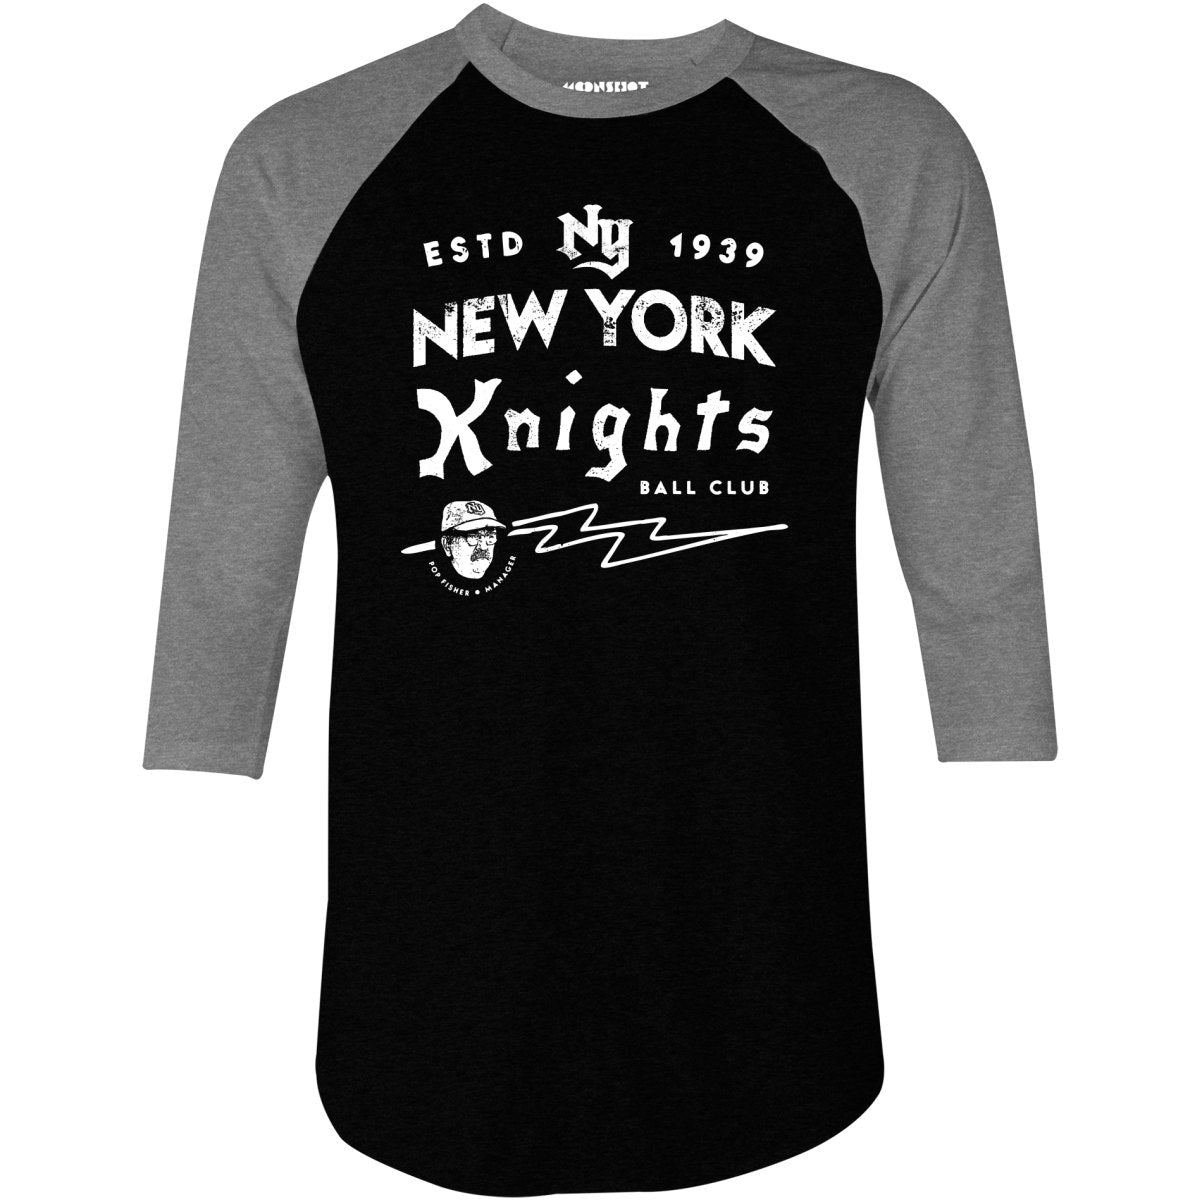 New York Knights Ball Club - 3/4 Sleeve Raglan T-Shirt